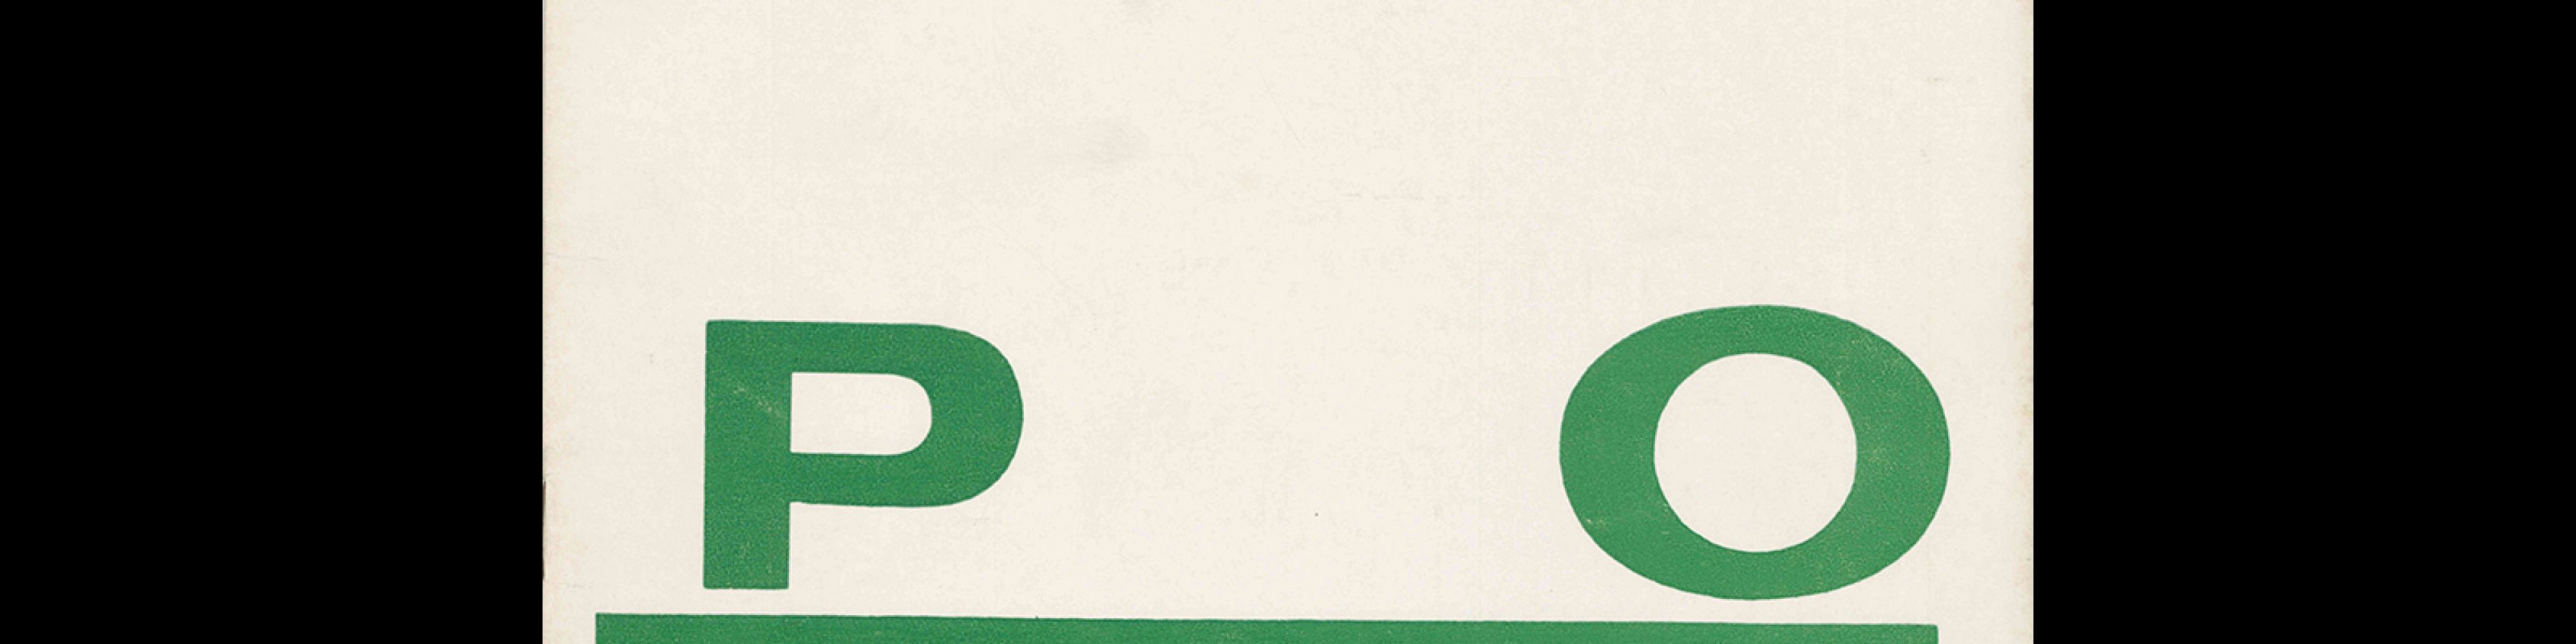 Typografia, ročník 67, 08, 1964. Cover design by Oldřich Hlavsa